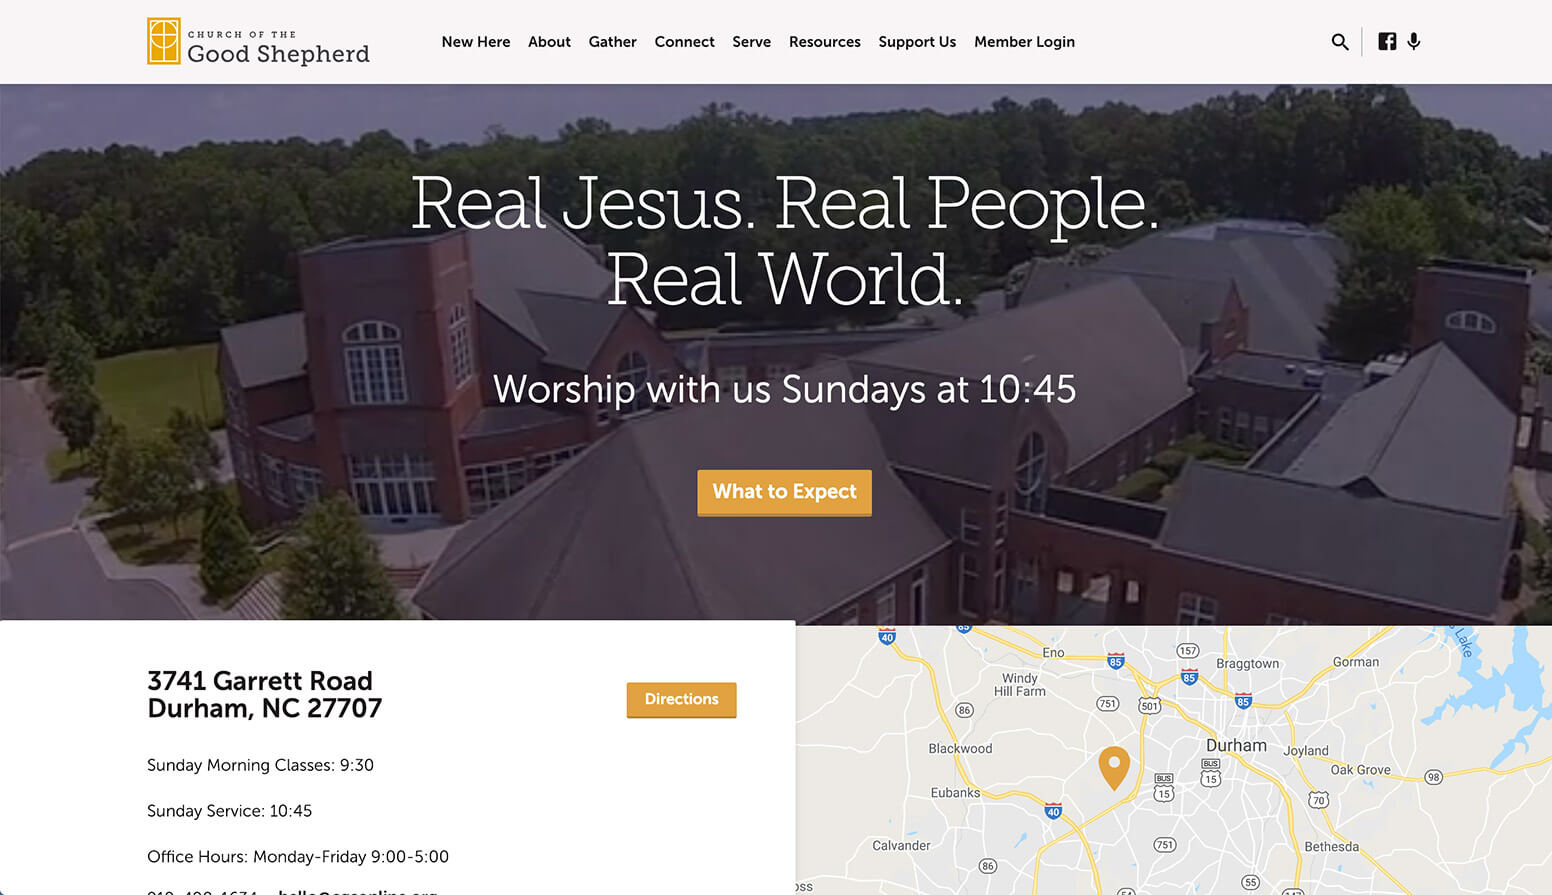 Church of the Good Shepherd Website